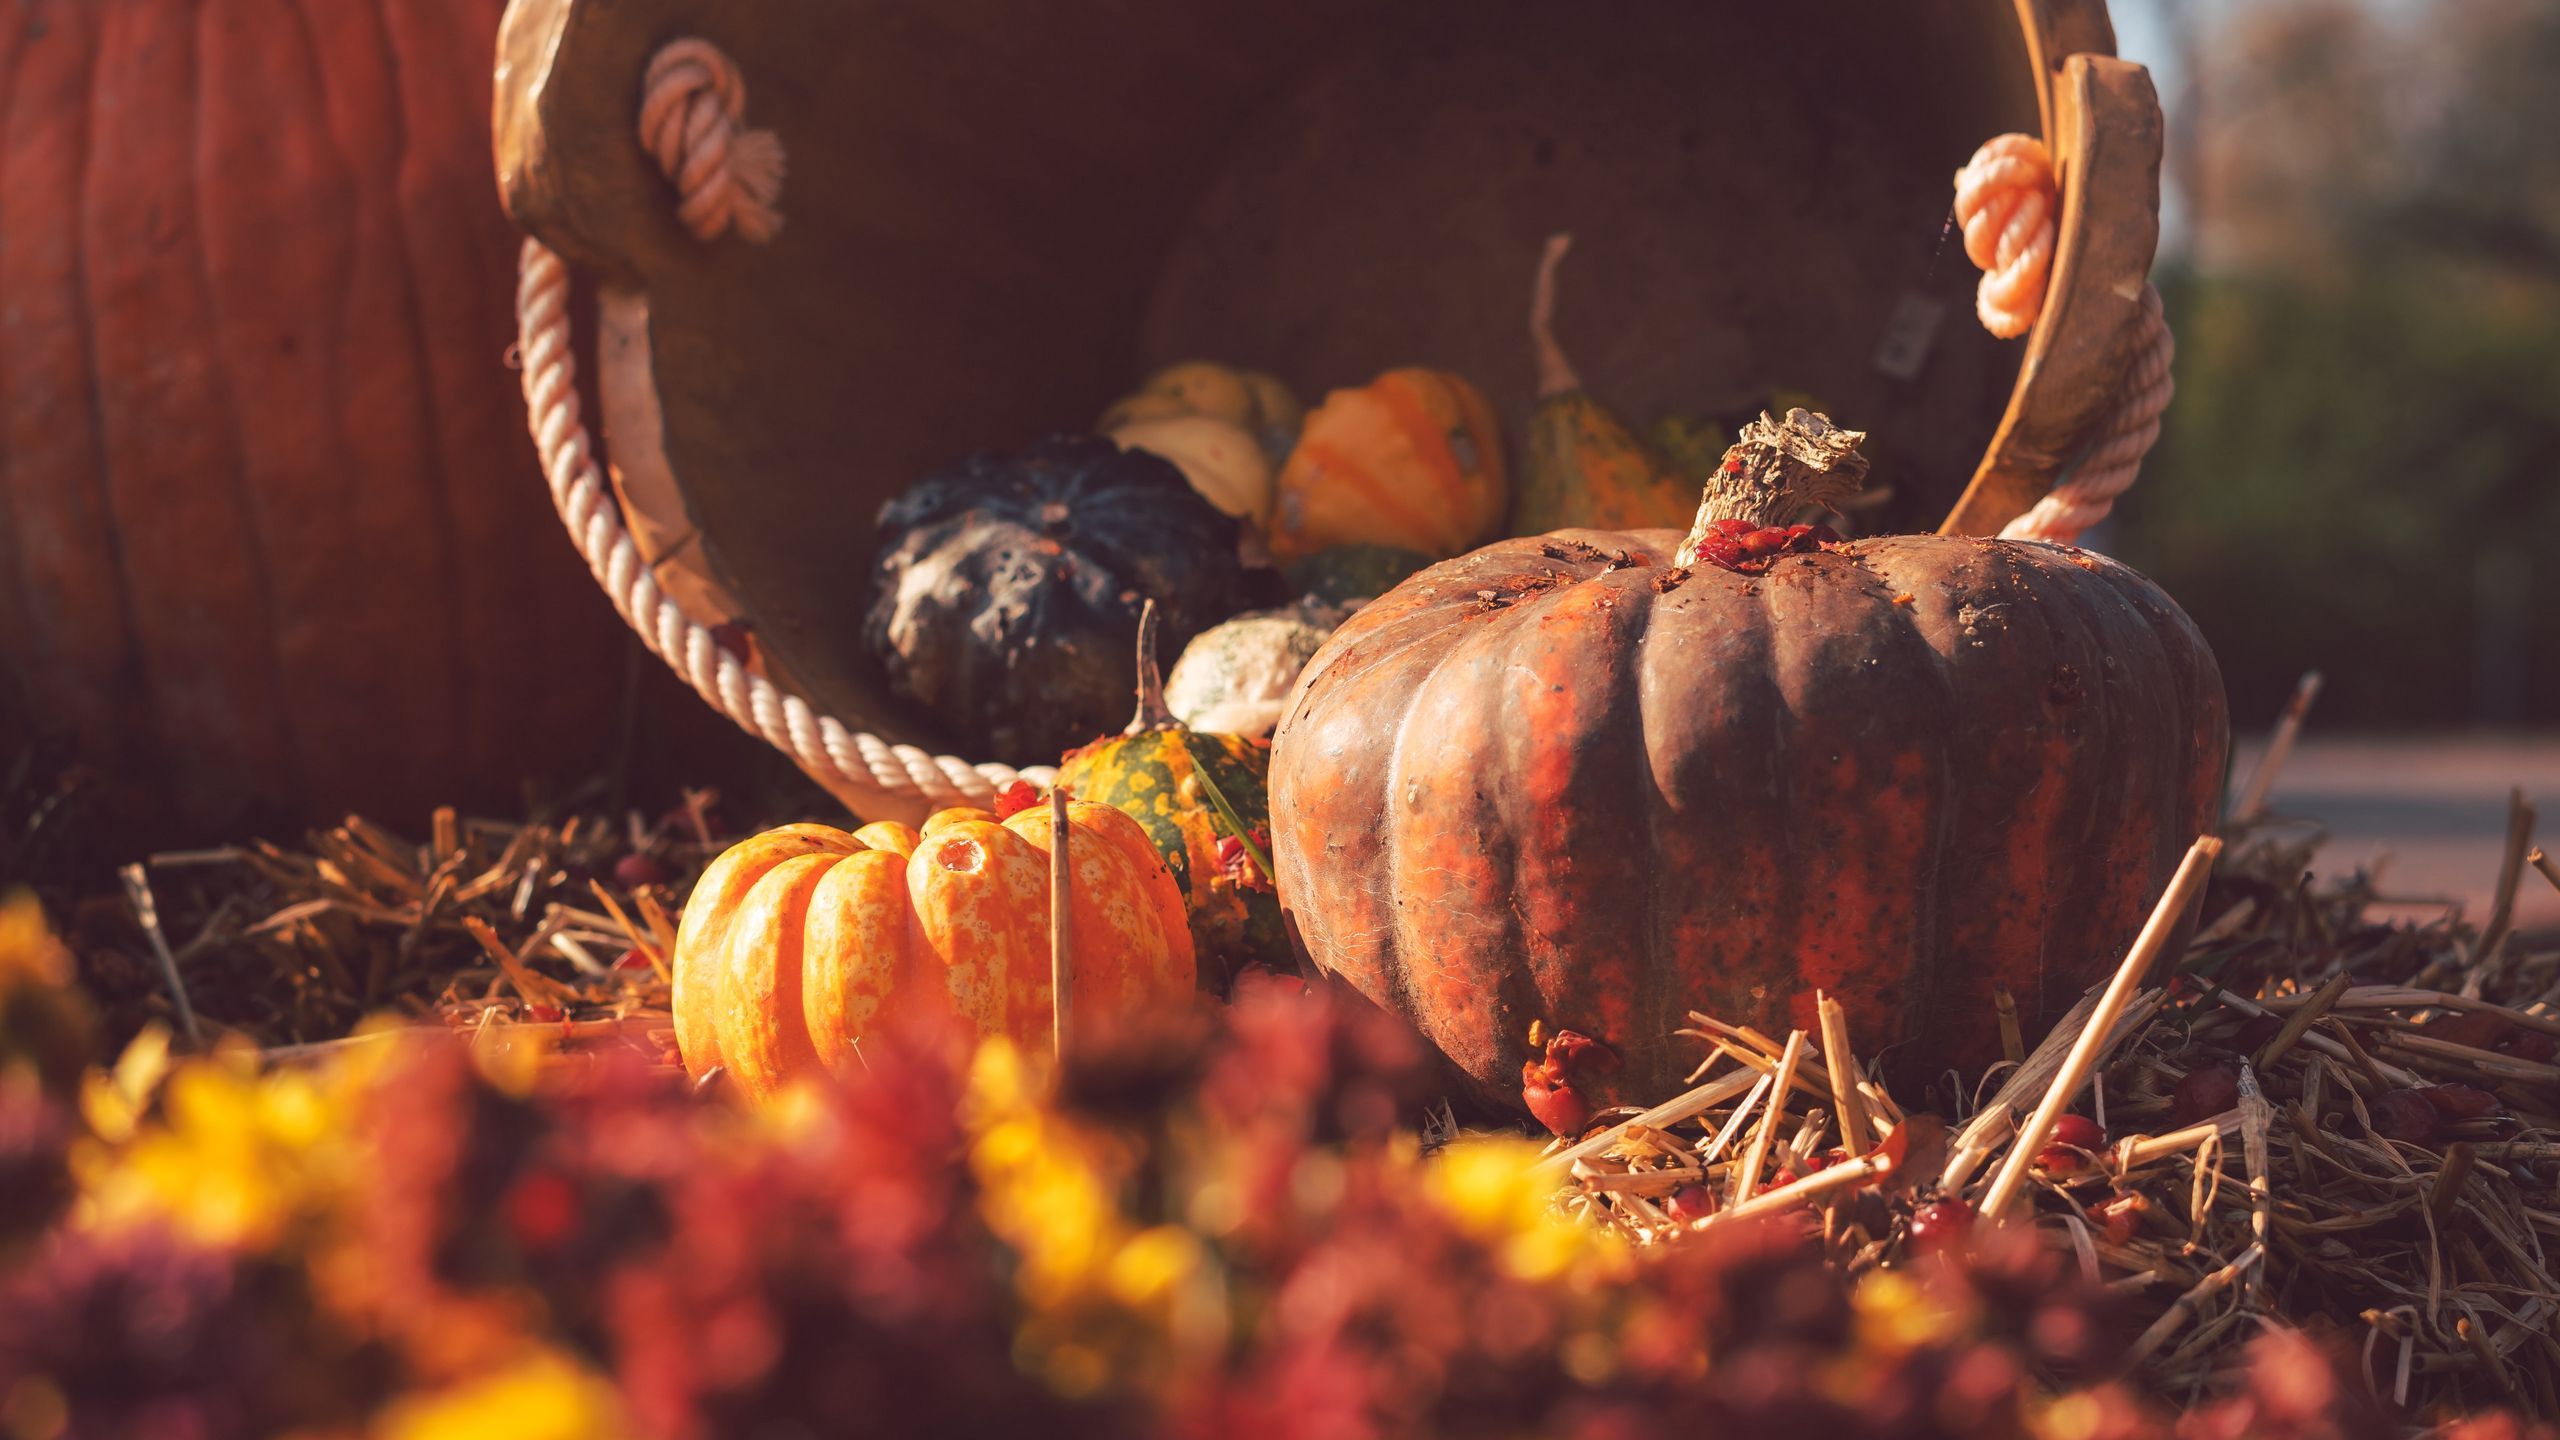 Download wallpaper 2560x1440 pumpkin, basket, straw, autumn, harvest widescreen 16:9 HD background